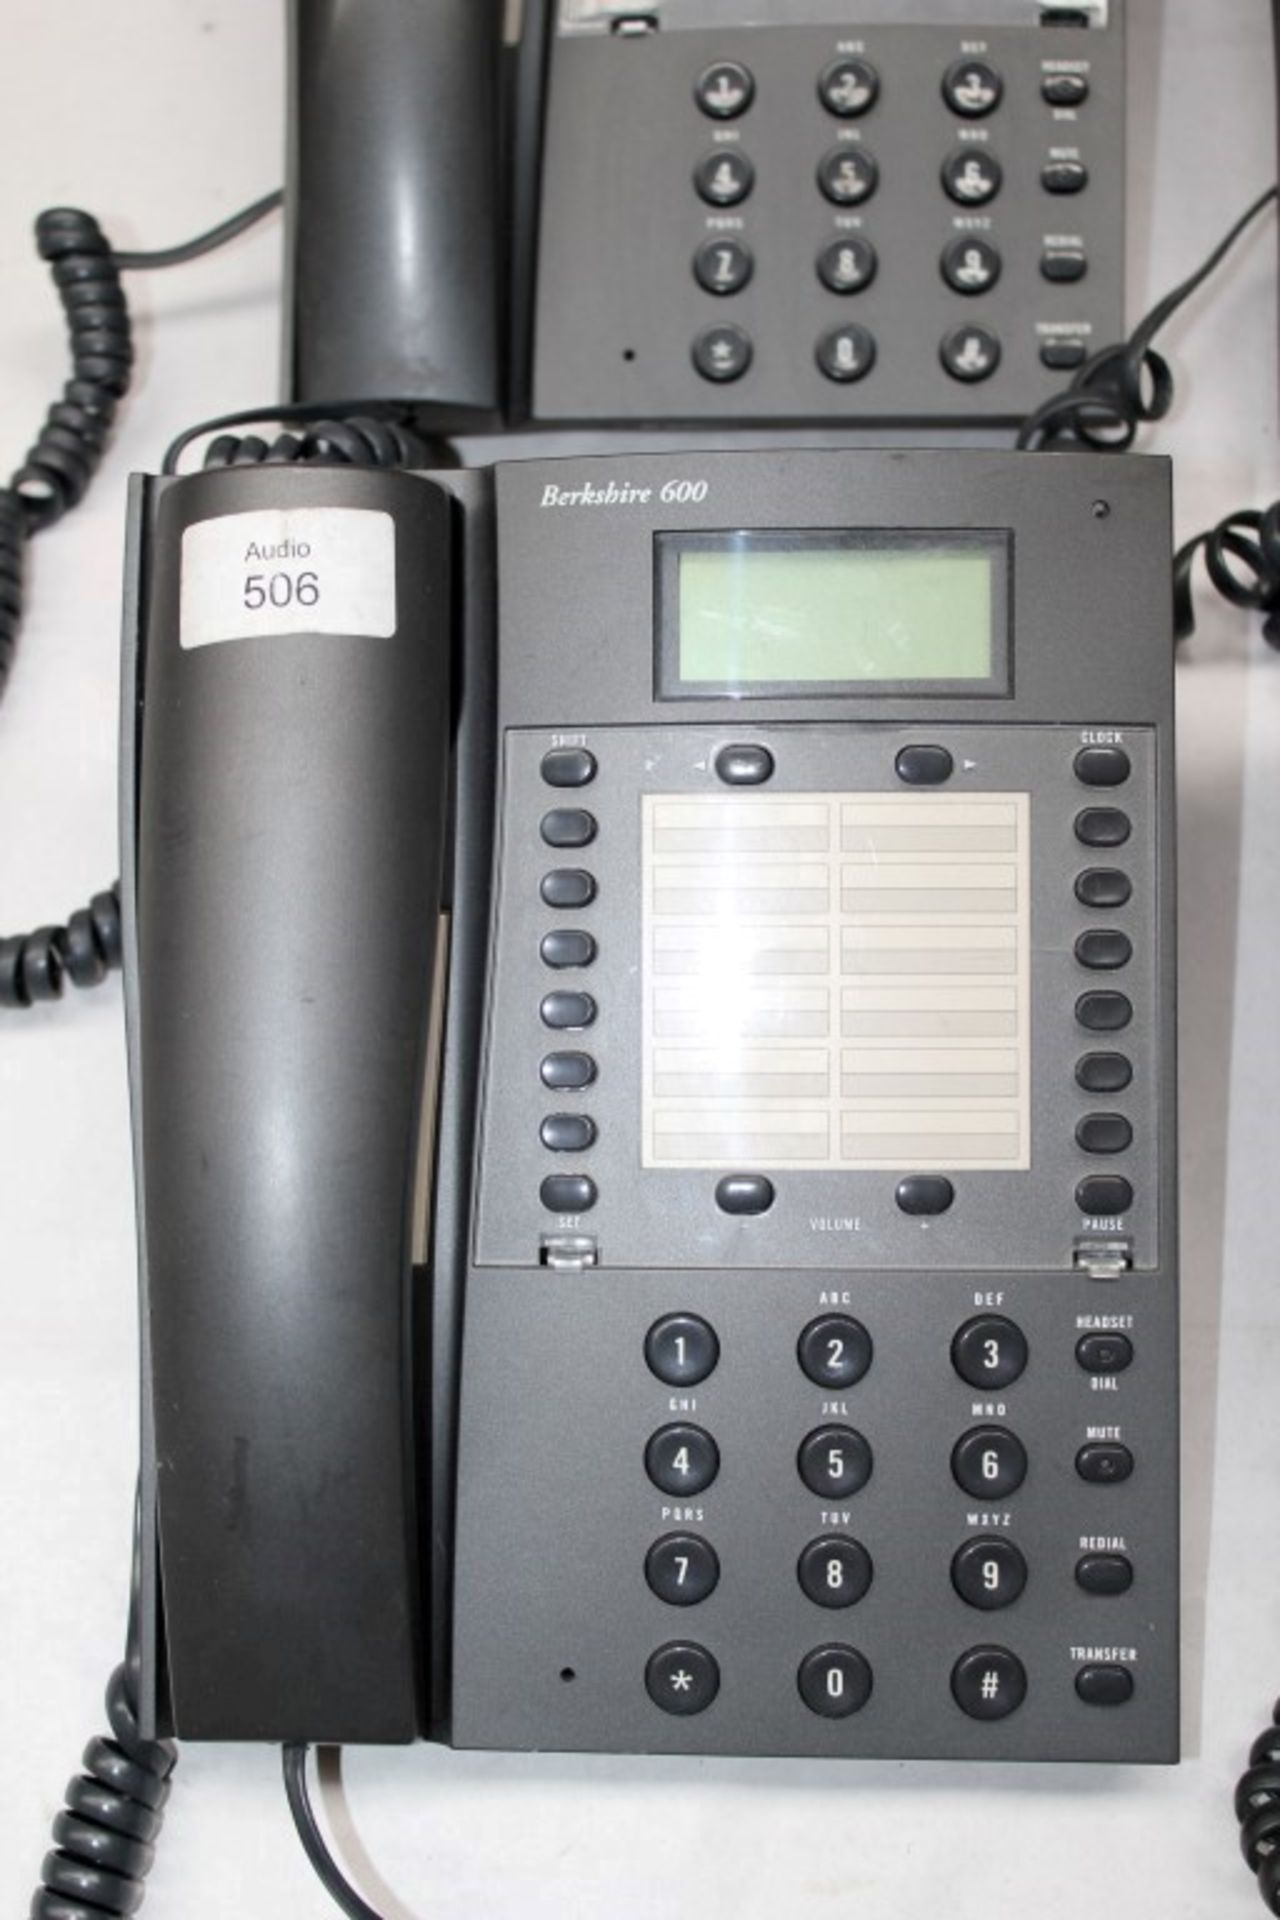 4 x ATL Professional Office Telephones - Model: Berkshire 600 - Pre-owned In Working Order - Taken - Image 2 of 4